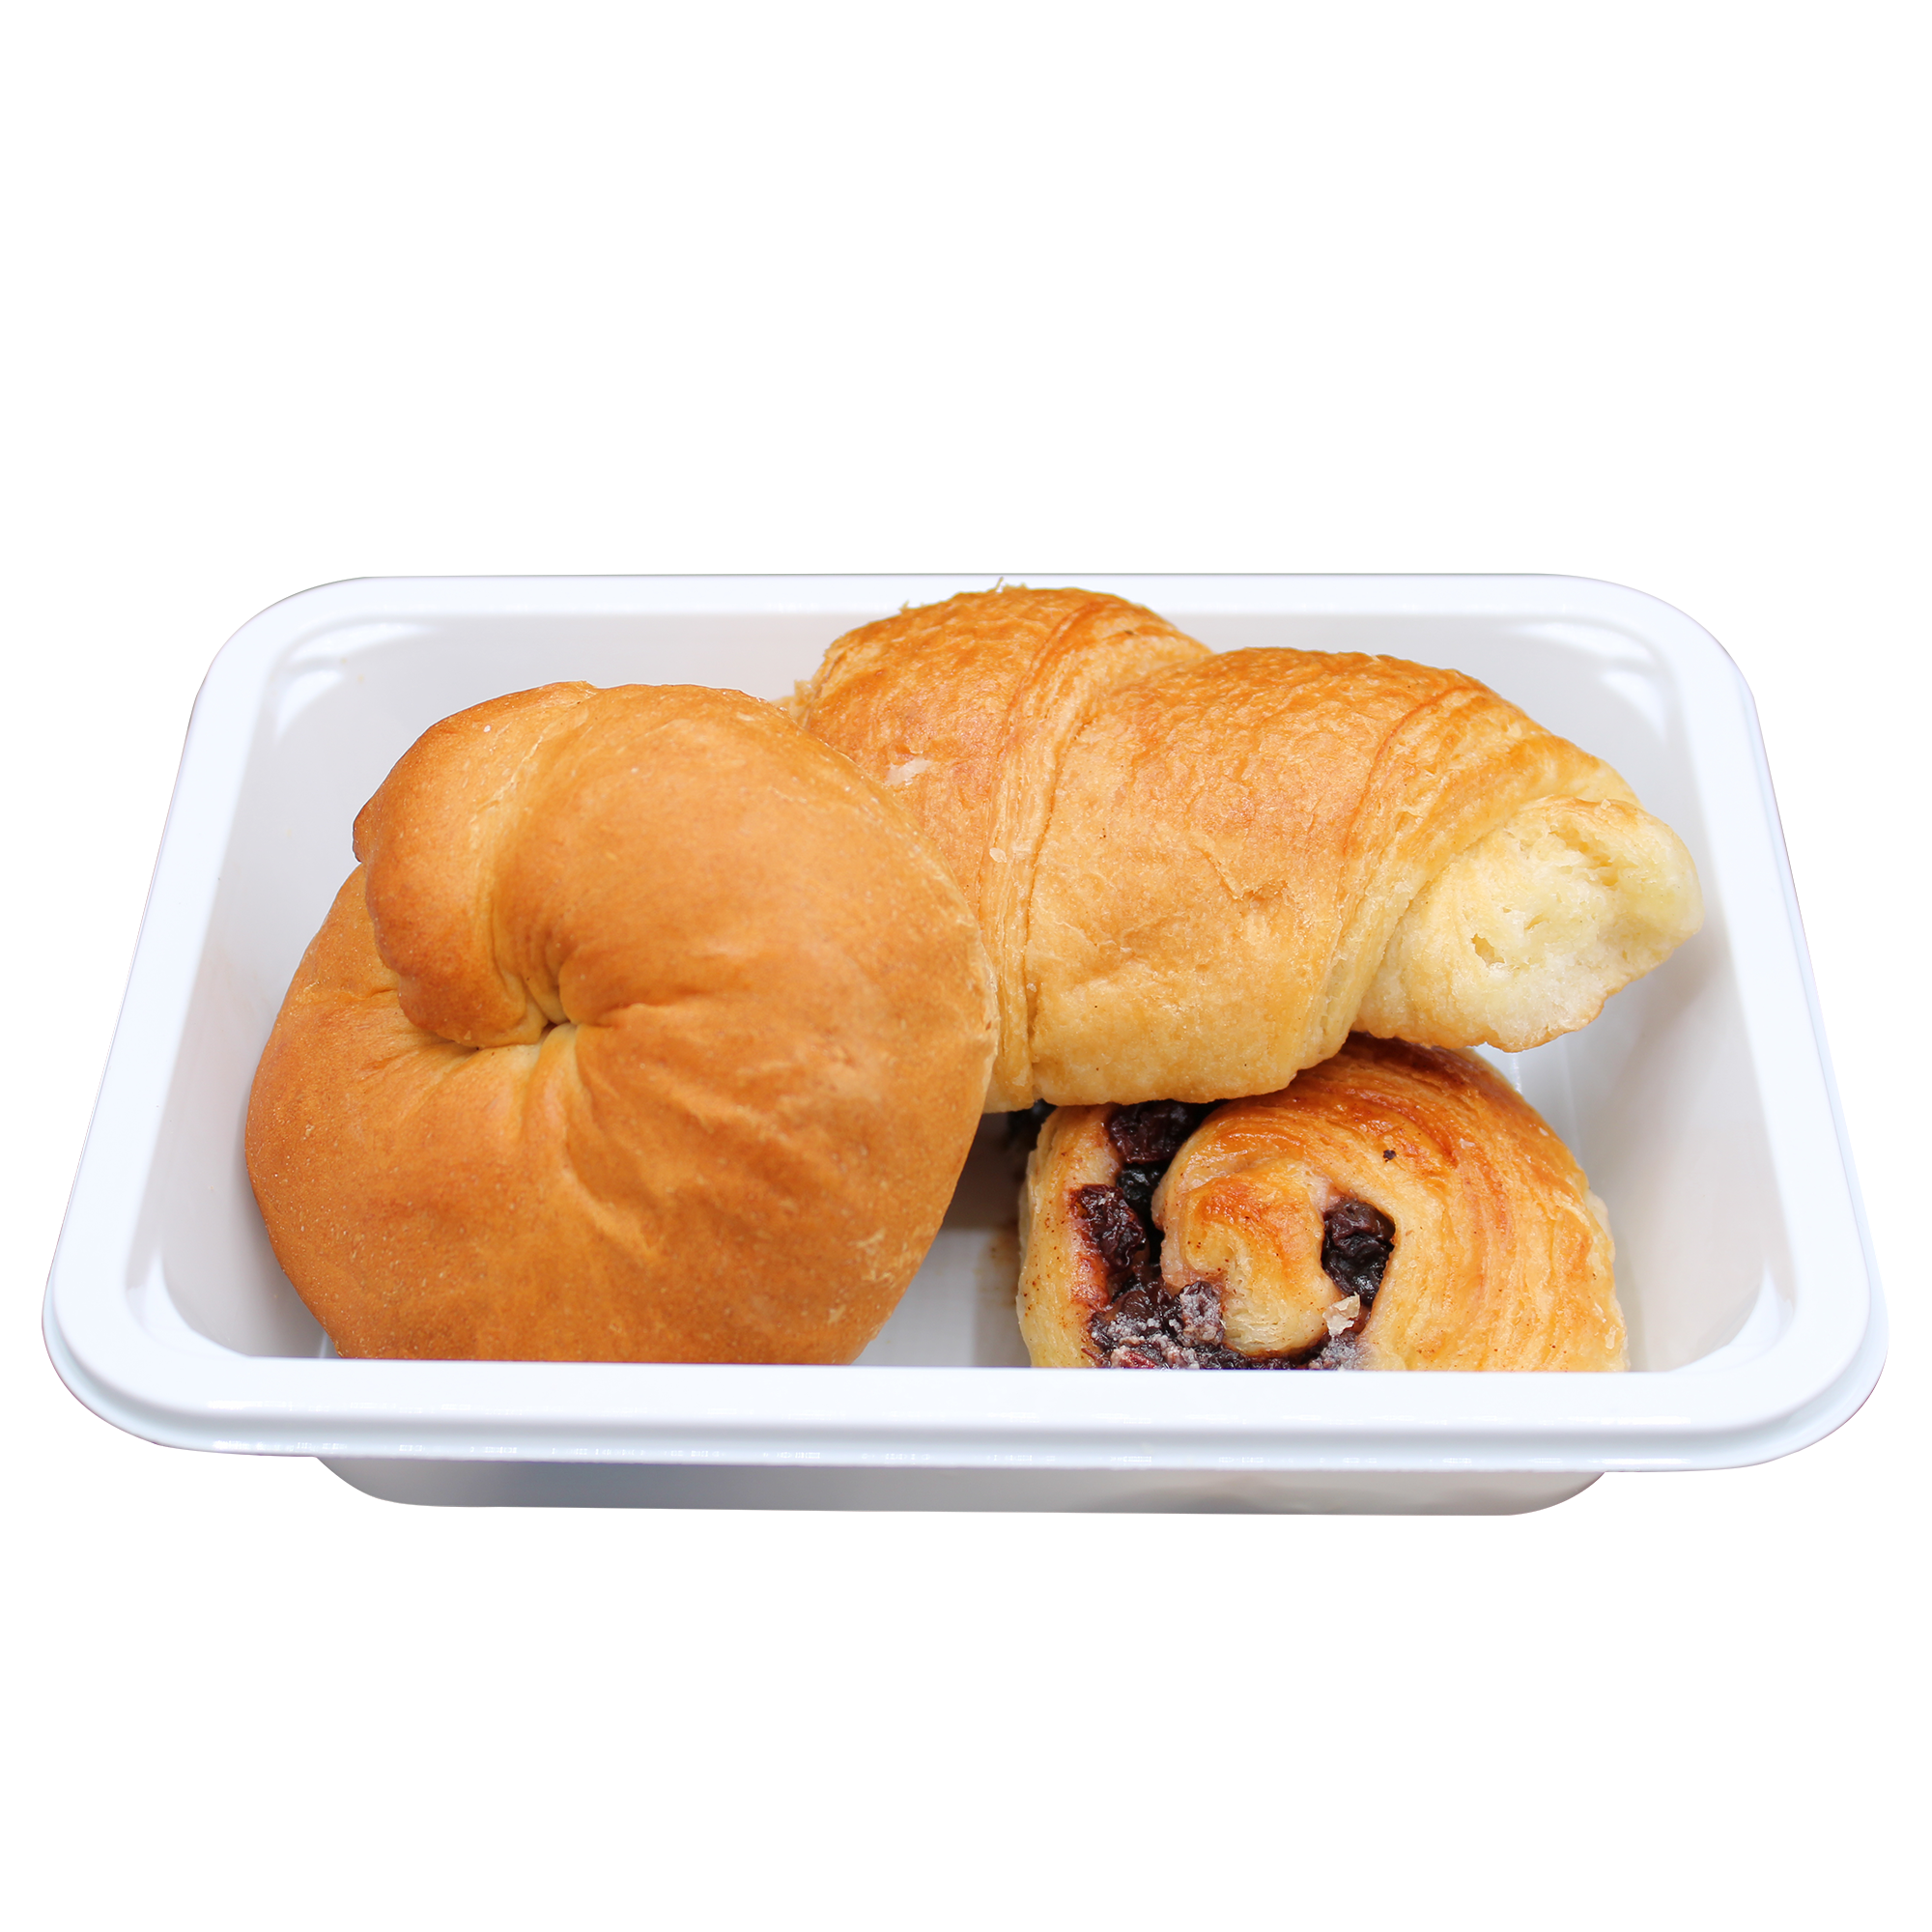 Bakery items - Bagel, Croissant & Danish Pastry